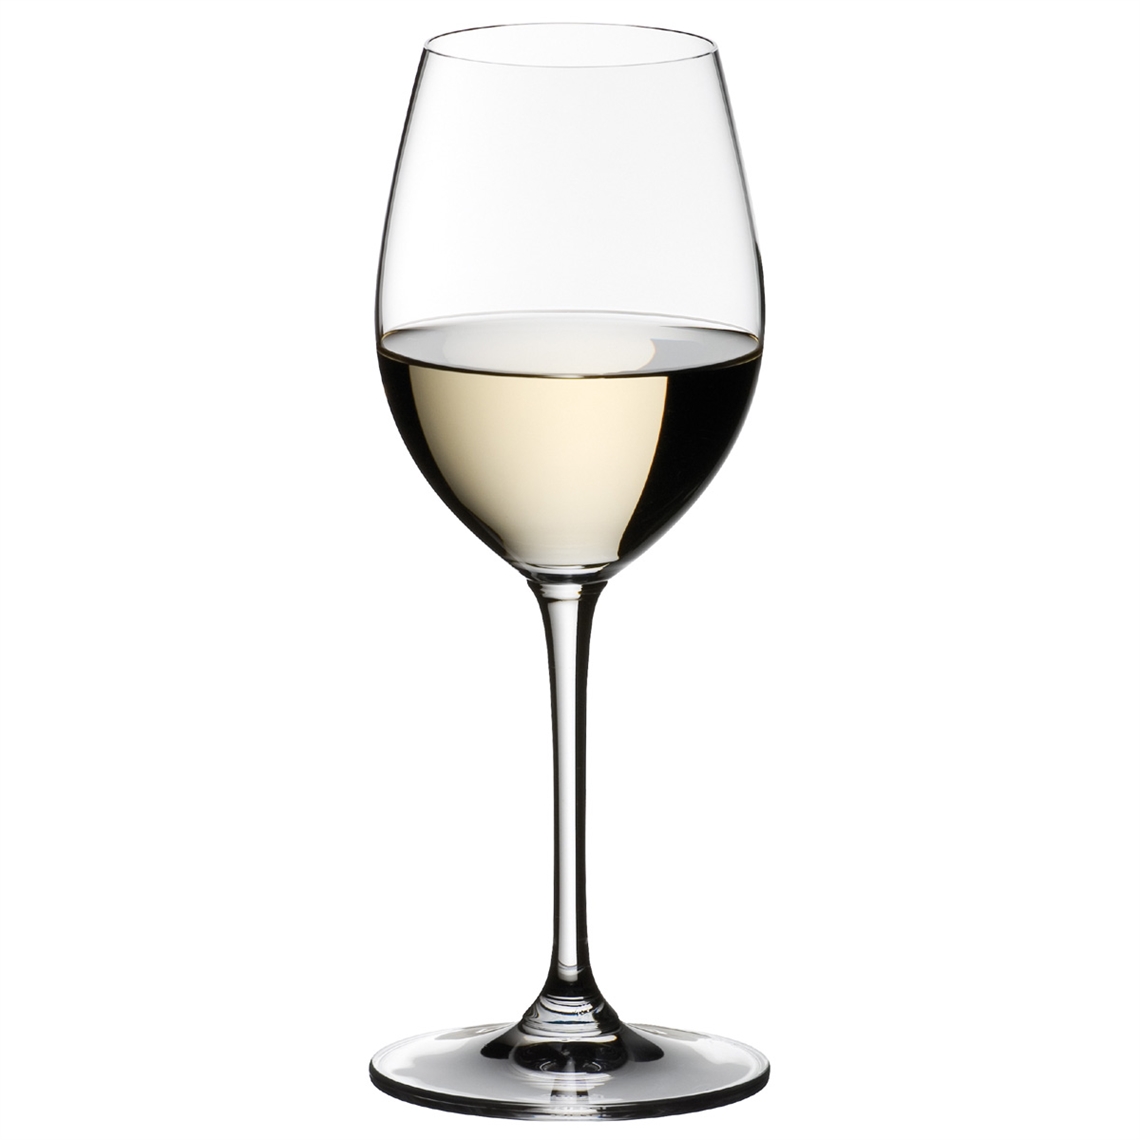 View more rioja wine glasses from our Dessert Wine Glasses range